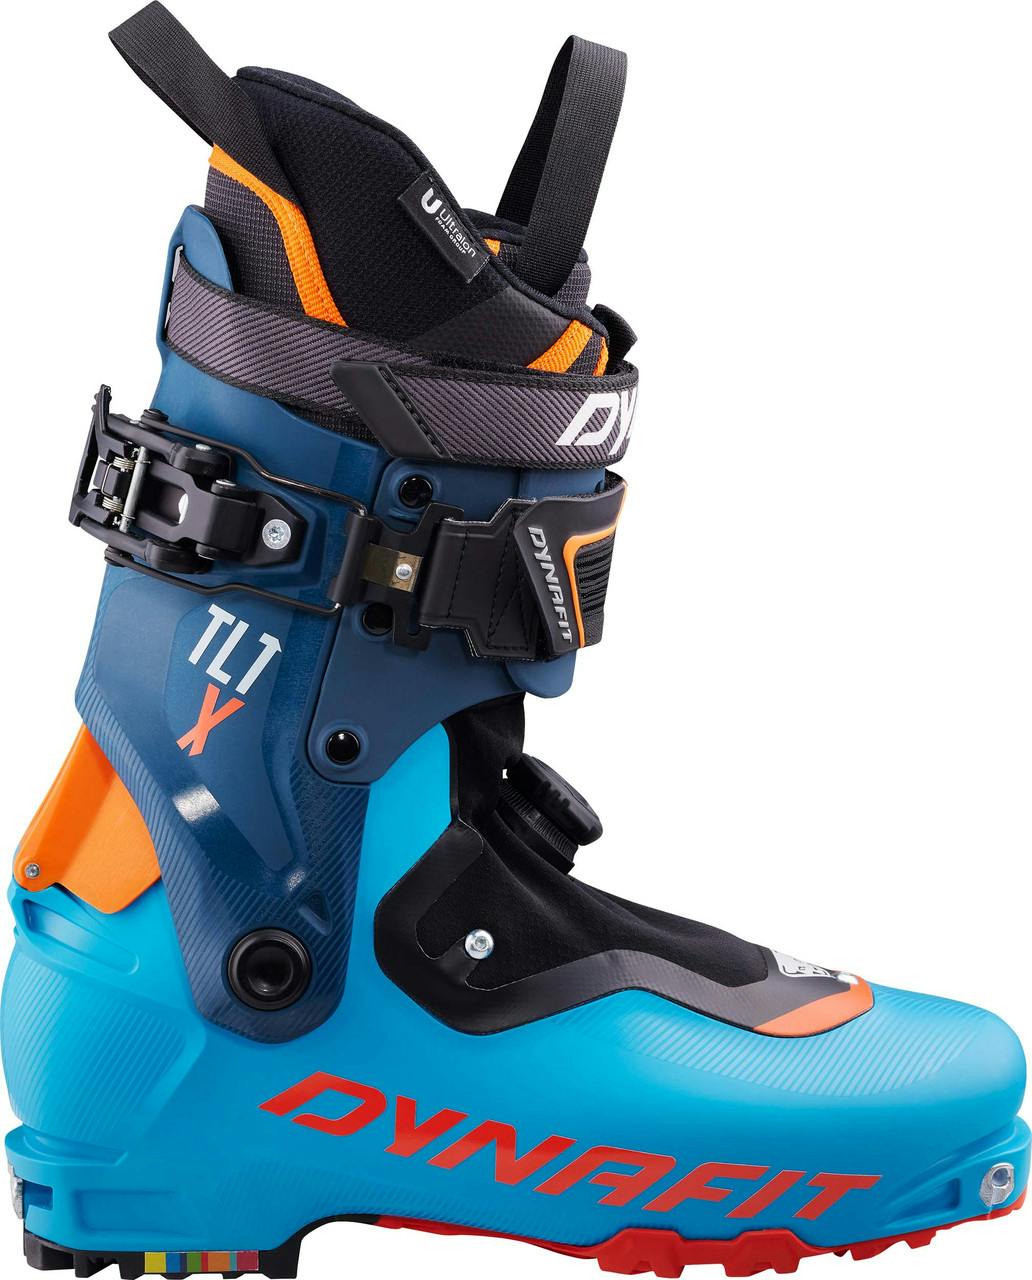 TLT X Ski Boots Frost/Orange